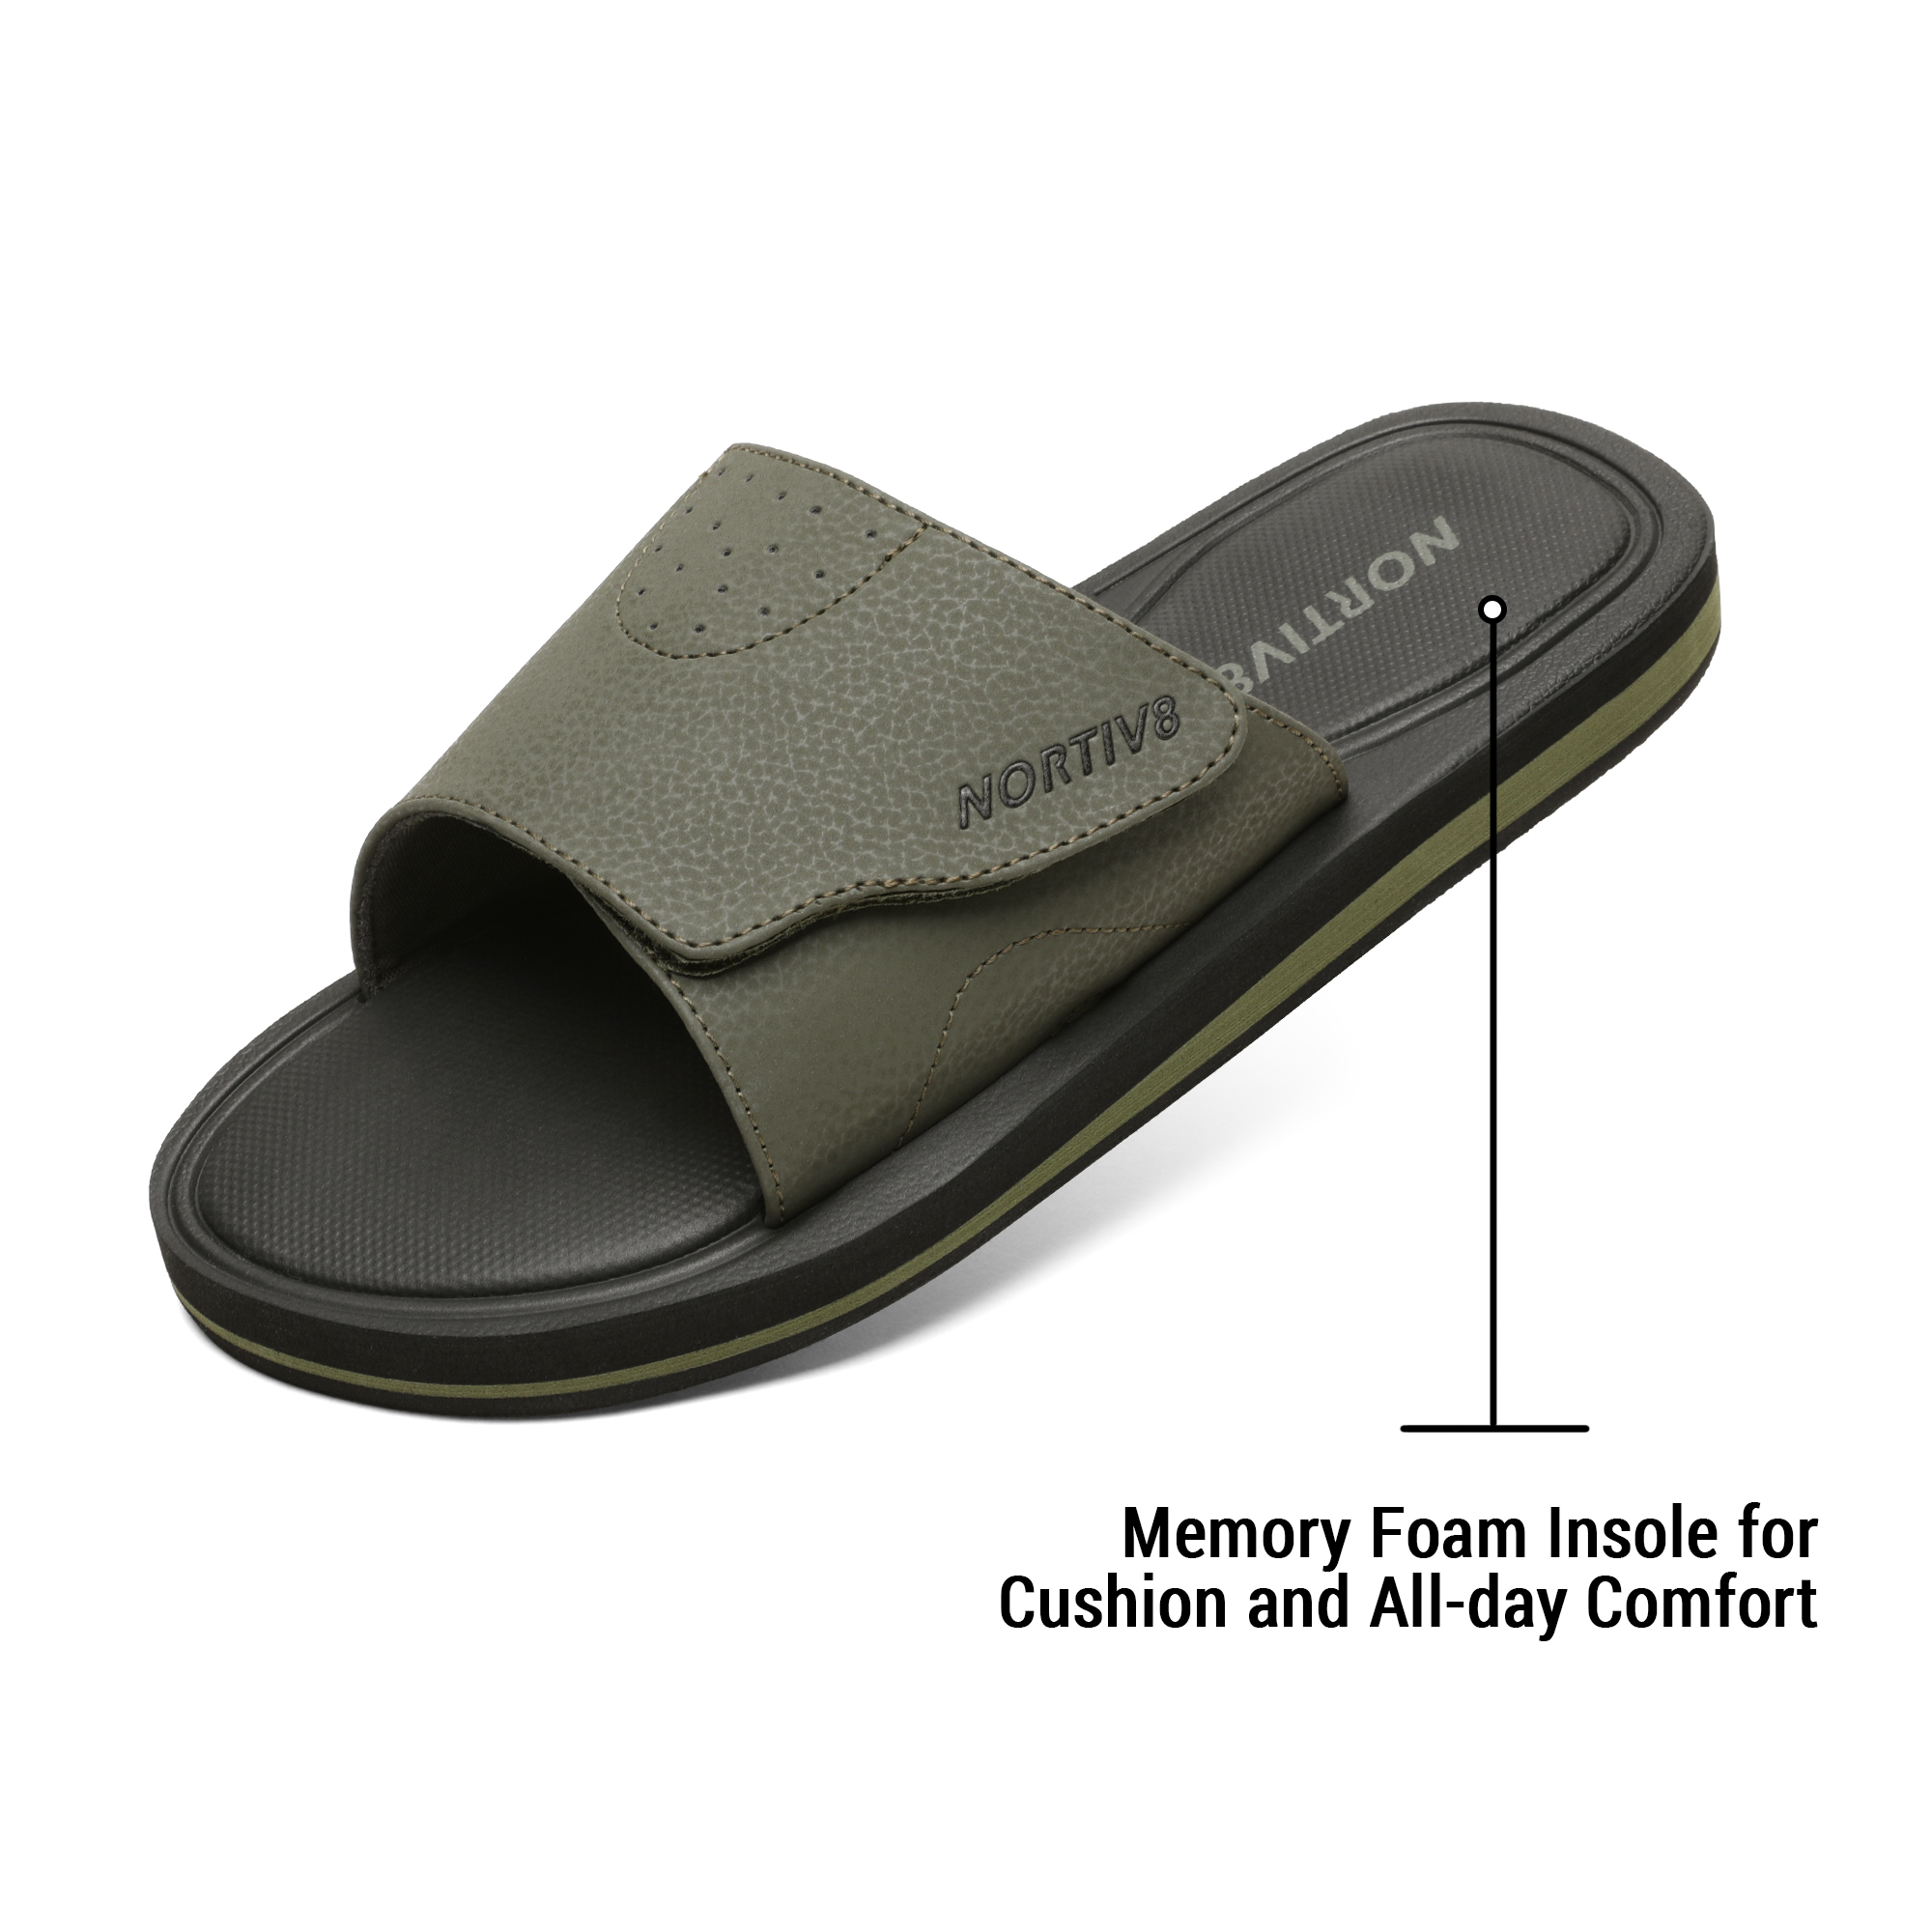 Nortiv8 Men's Memory Foam Adjustable Slide Sandals Comfort Lightweight Summer Beach Sandals Shoes FUSION OLIVE/GREEN Size 13 - image 2 of 5